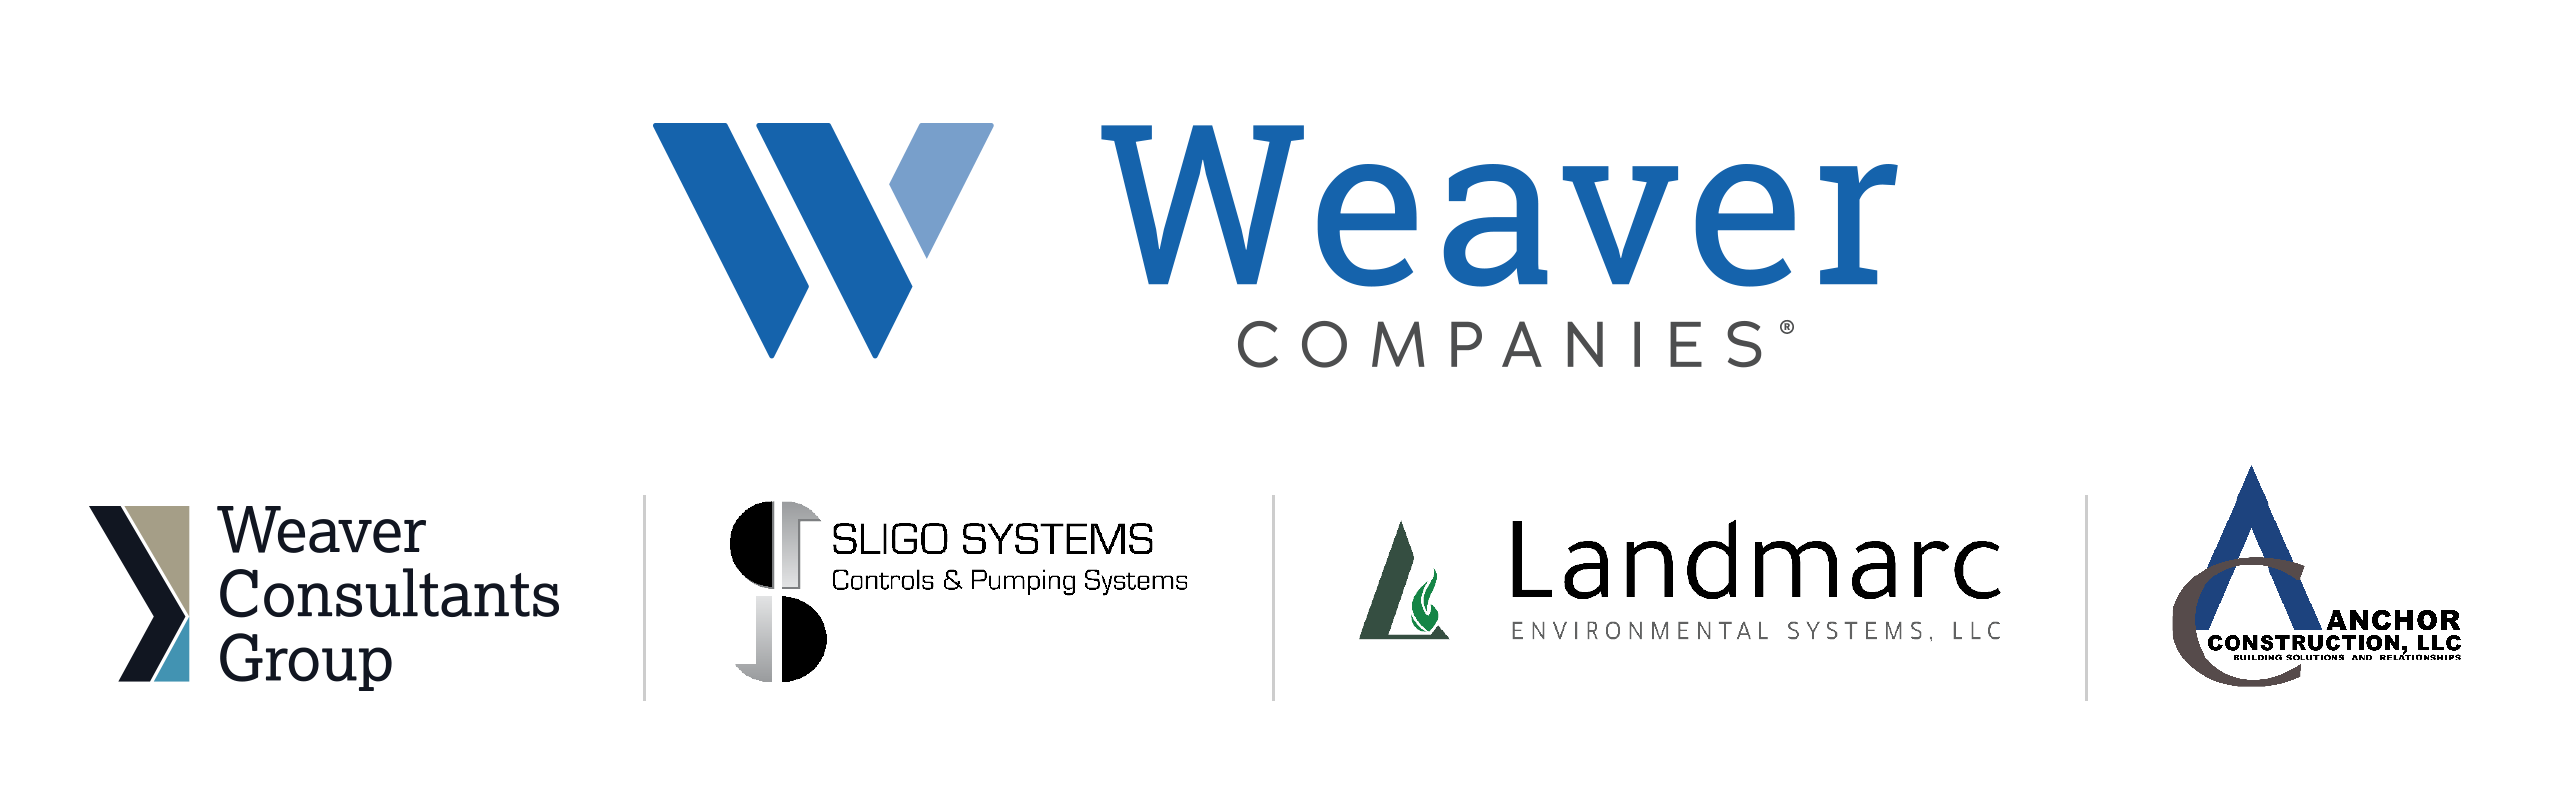 Weaver Companies